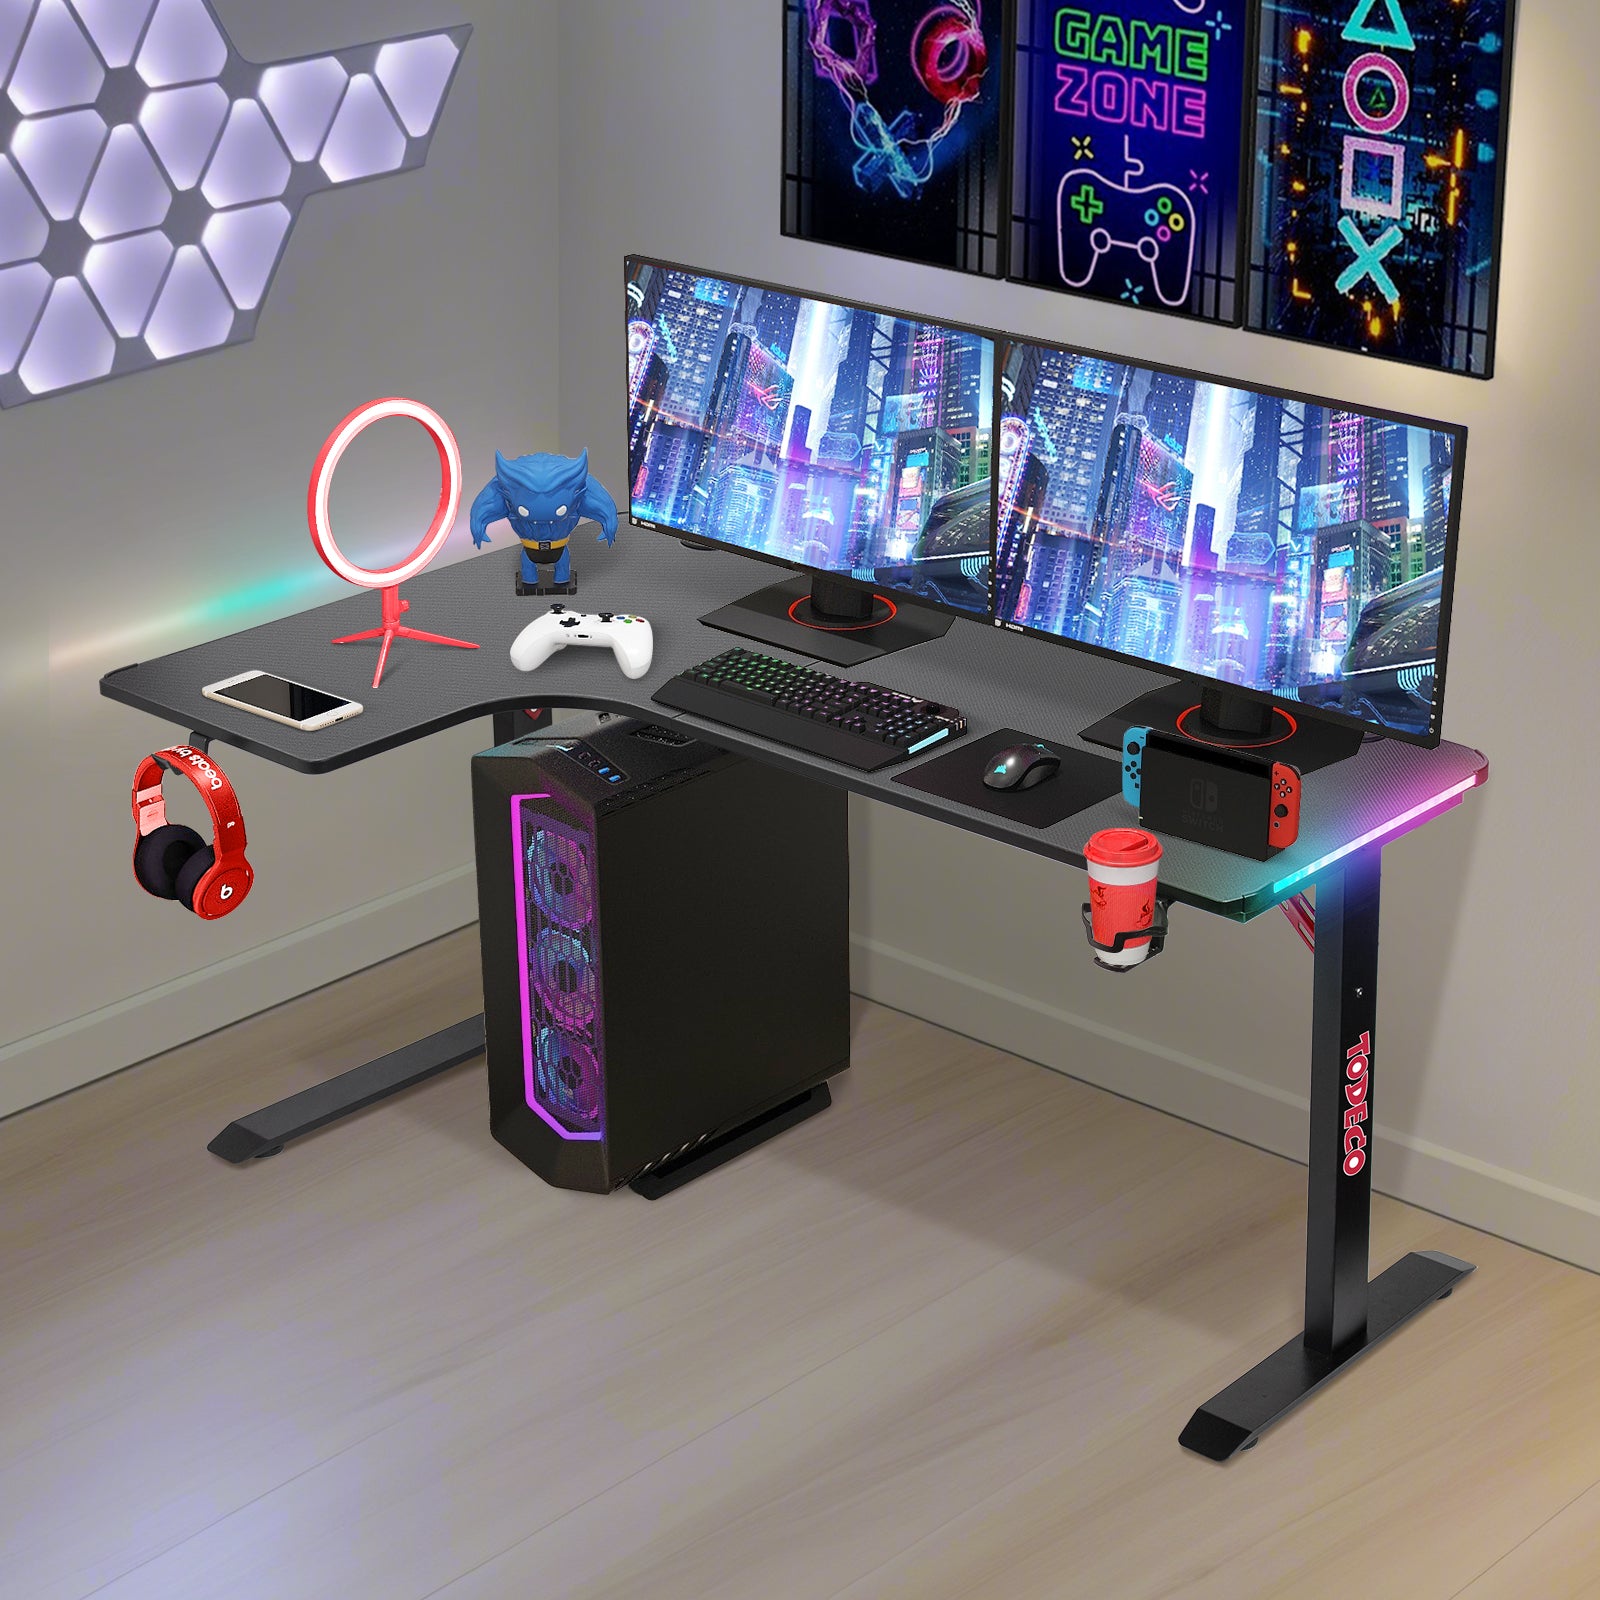 Todeco-Corner-Desk-L-Shaped-Desk-LED-Gaming-Desk-140-x-100cm-Large-Gaming-Desk-with-Carbon-Fiber-Top-with-Cup-Holder-and-Headphone-Hook